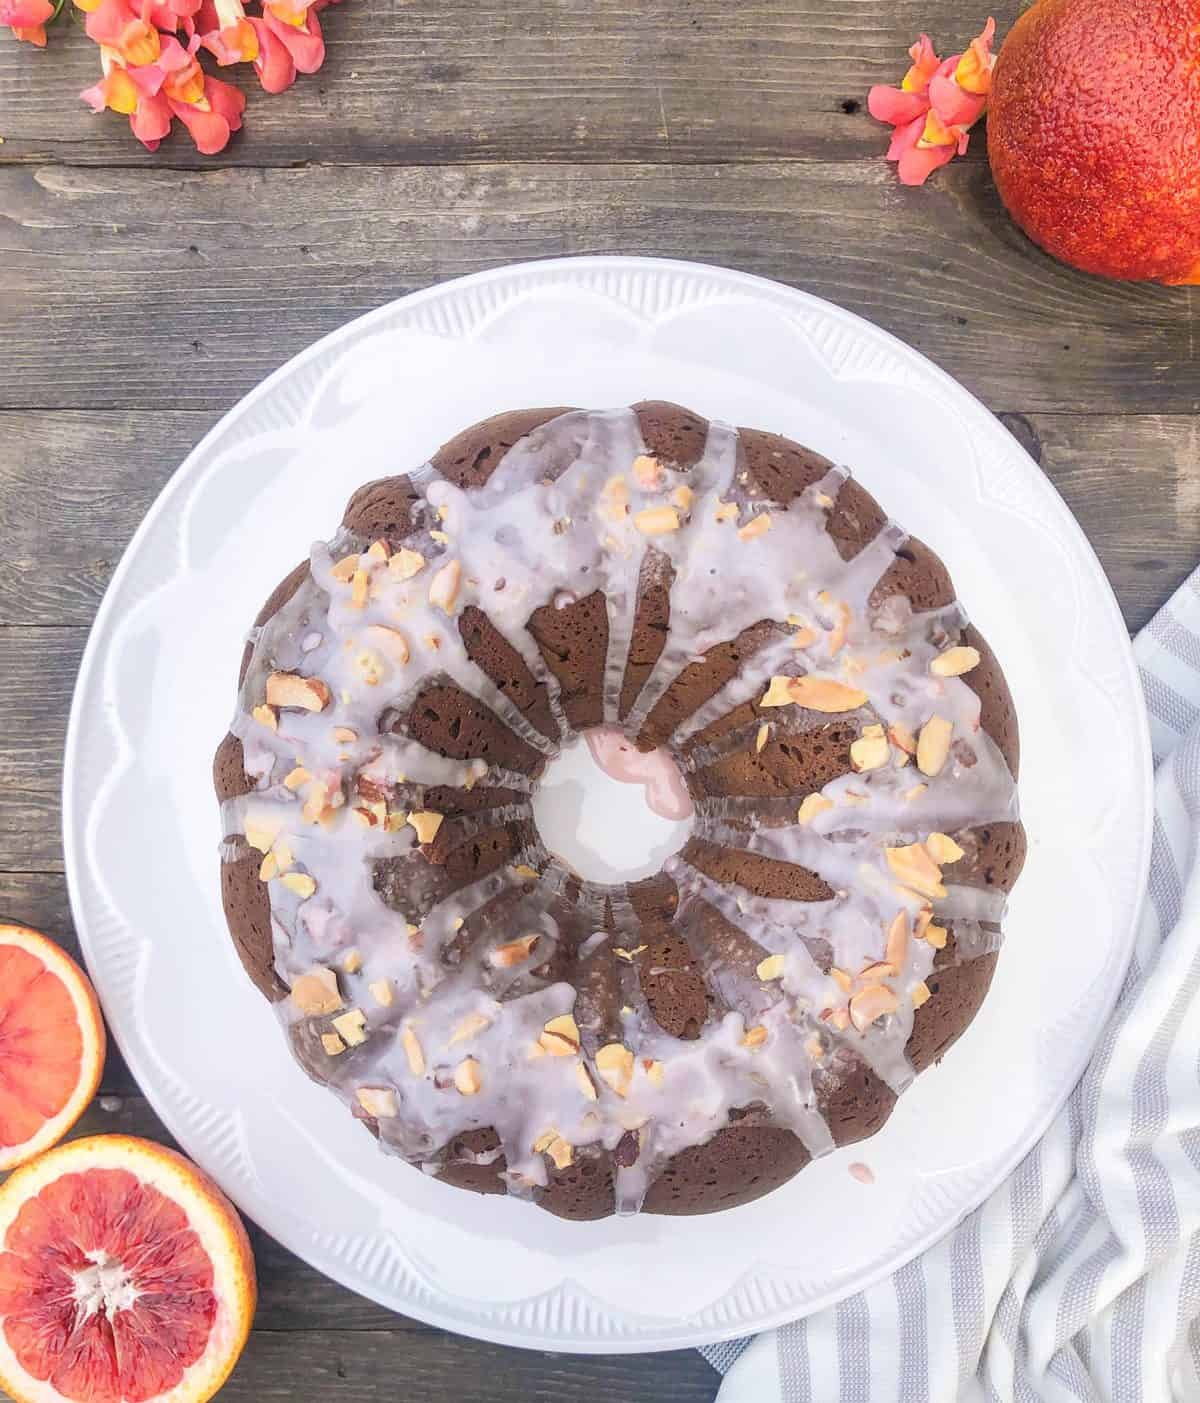 Our Favorite Recipe with Blood Orange: Blood Orange & Almond Cake